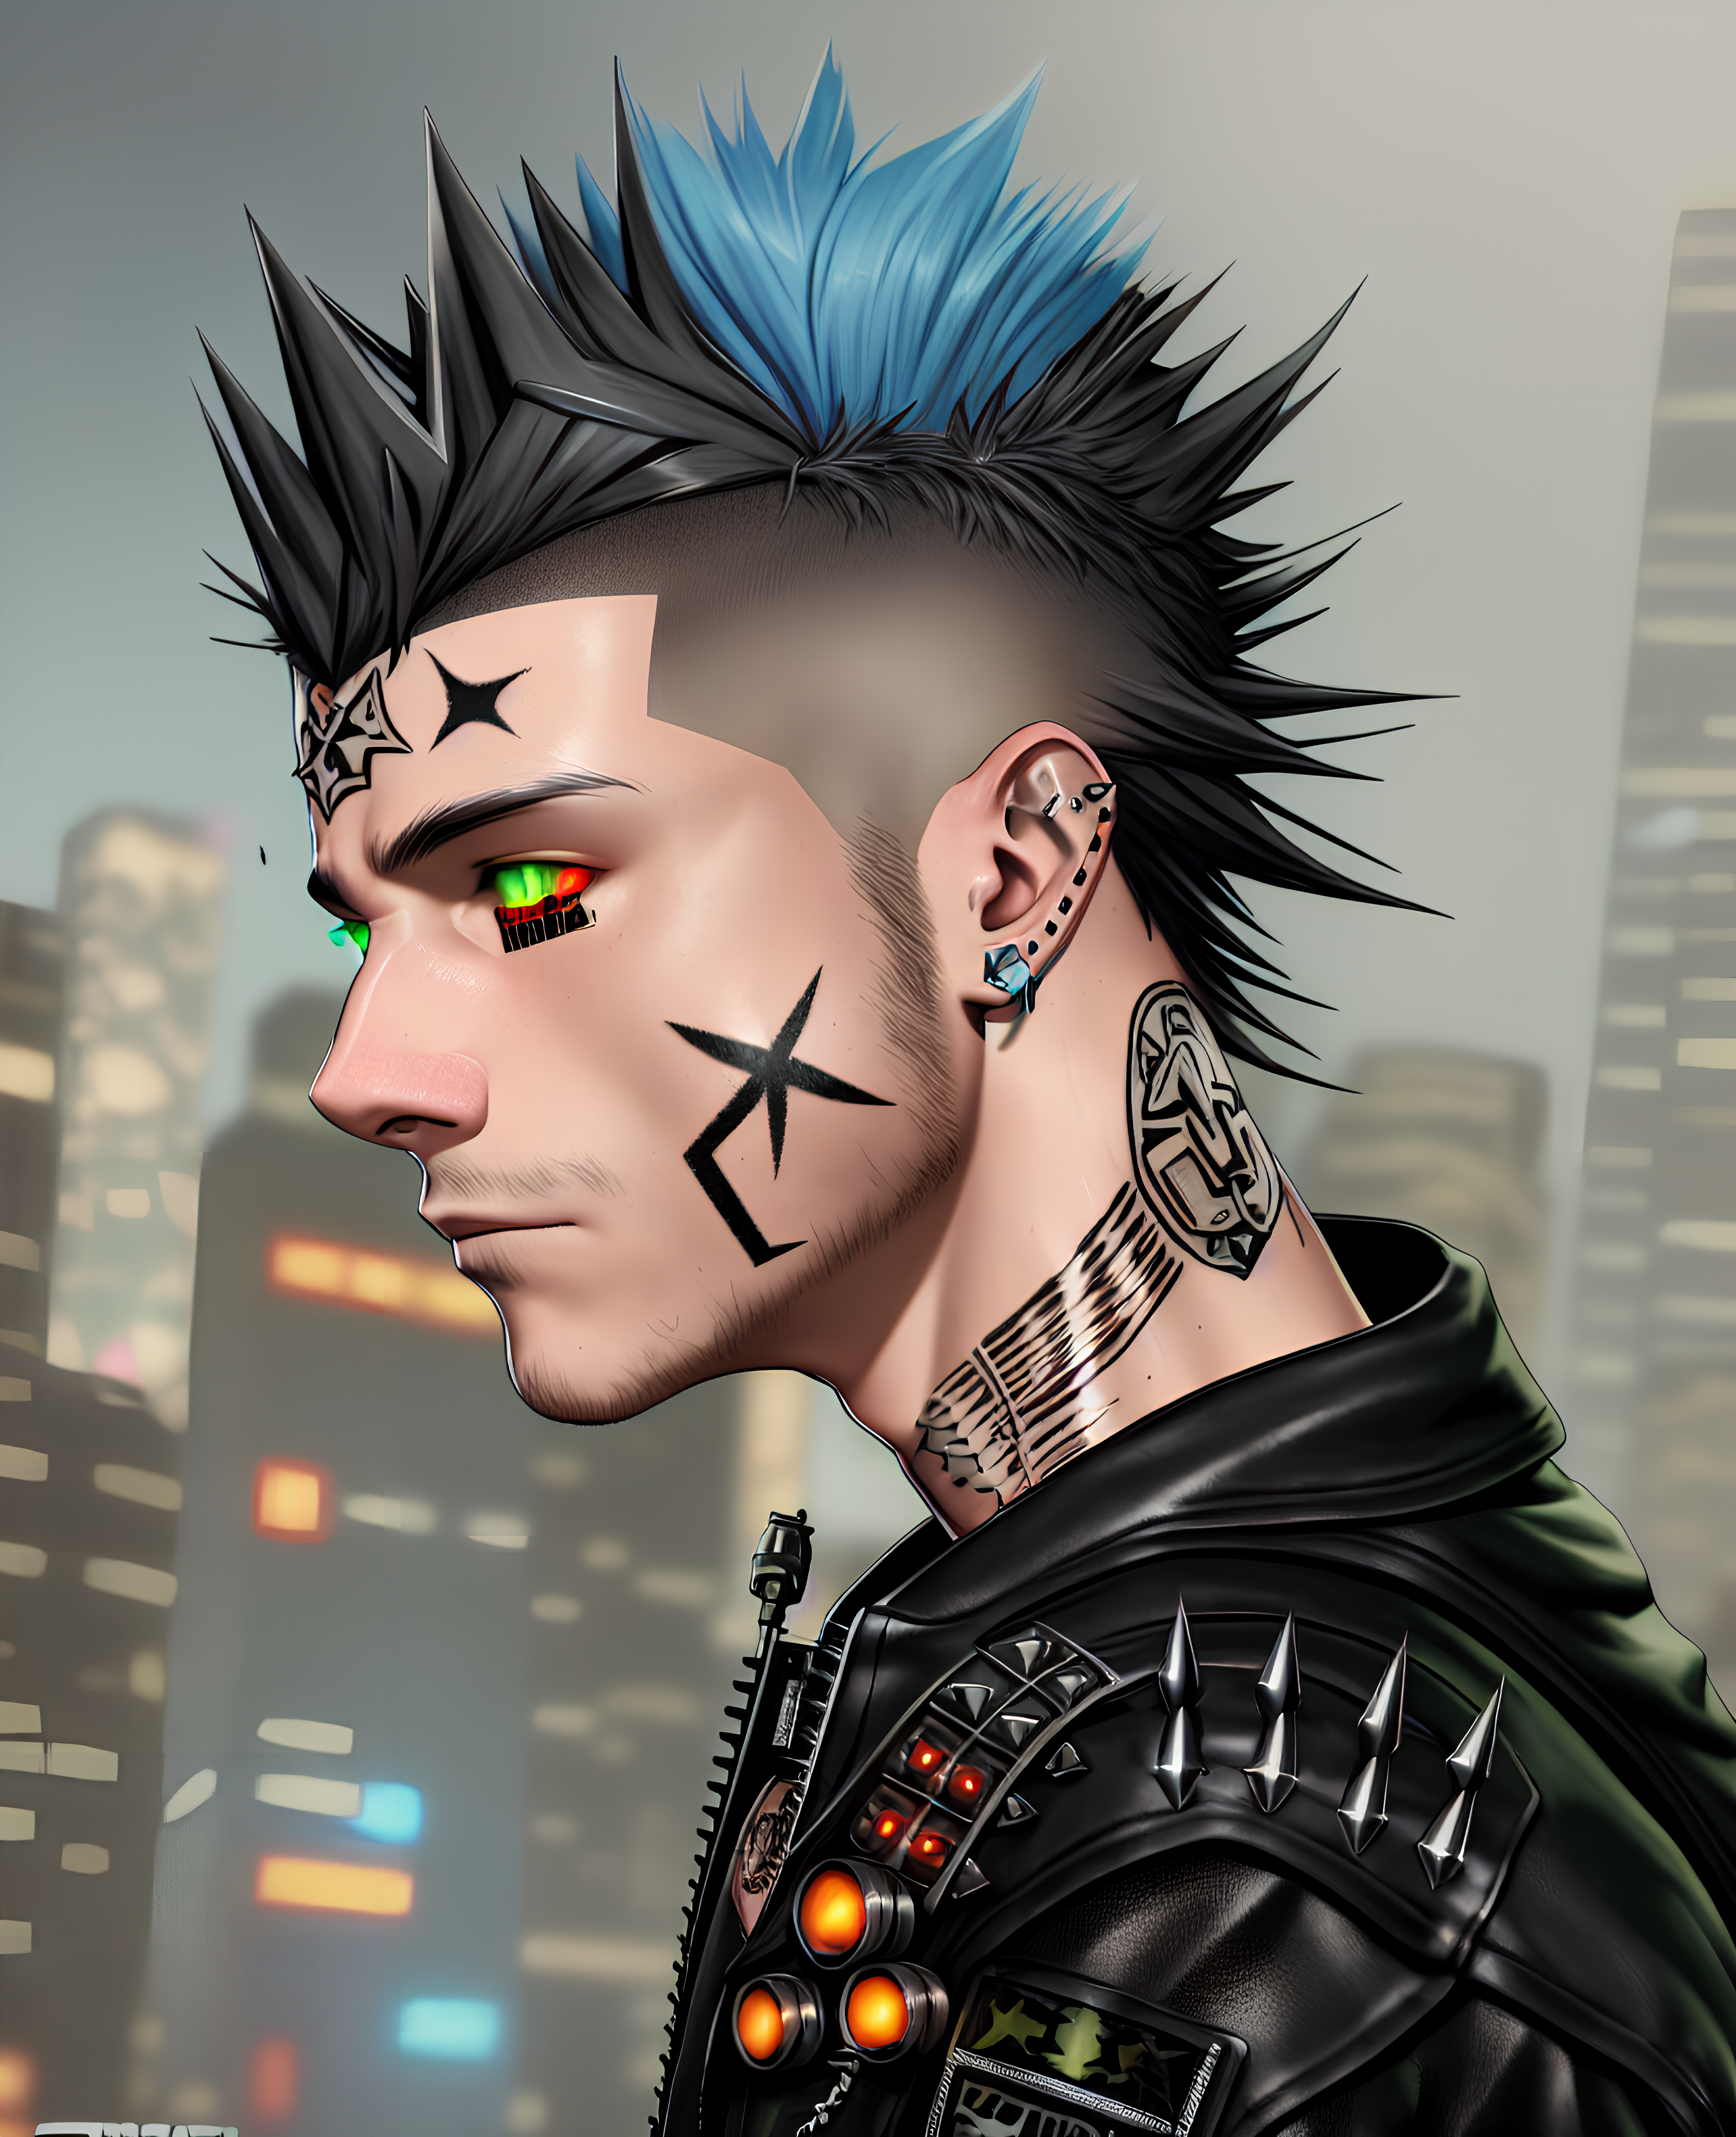 ANIME Cyberpunk Boy (2) by PunkerLazar on DeviantArt